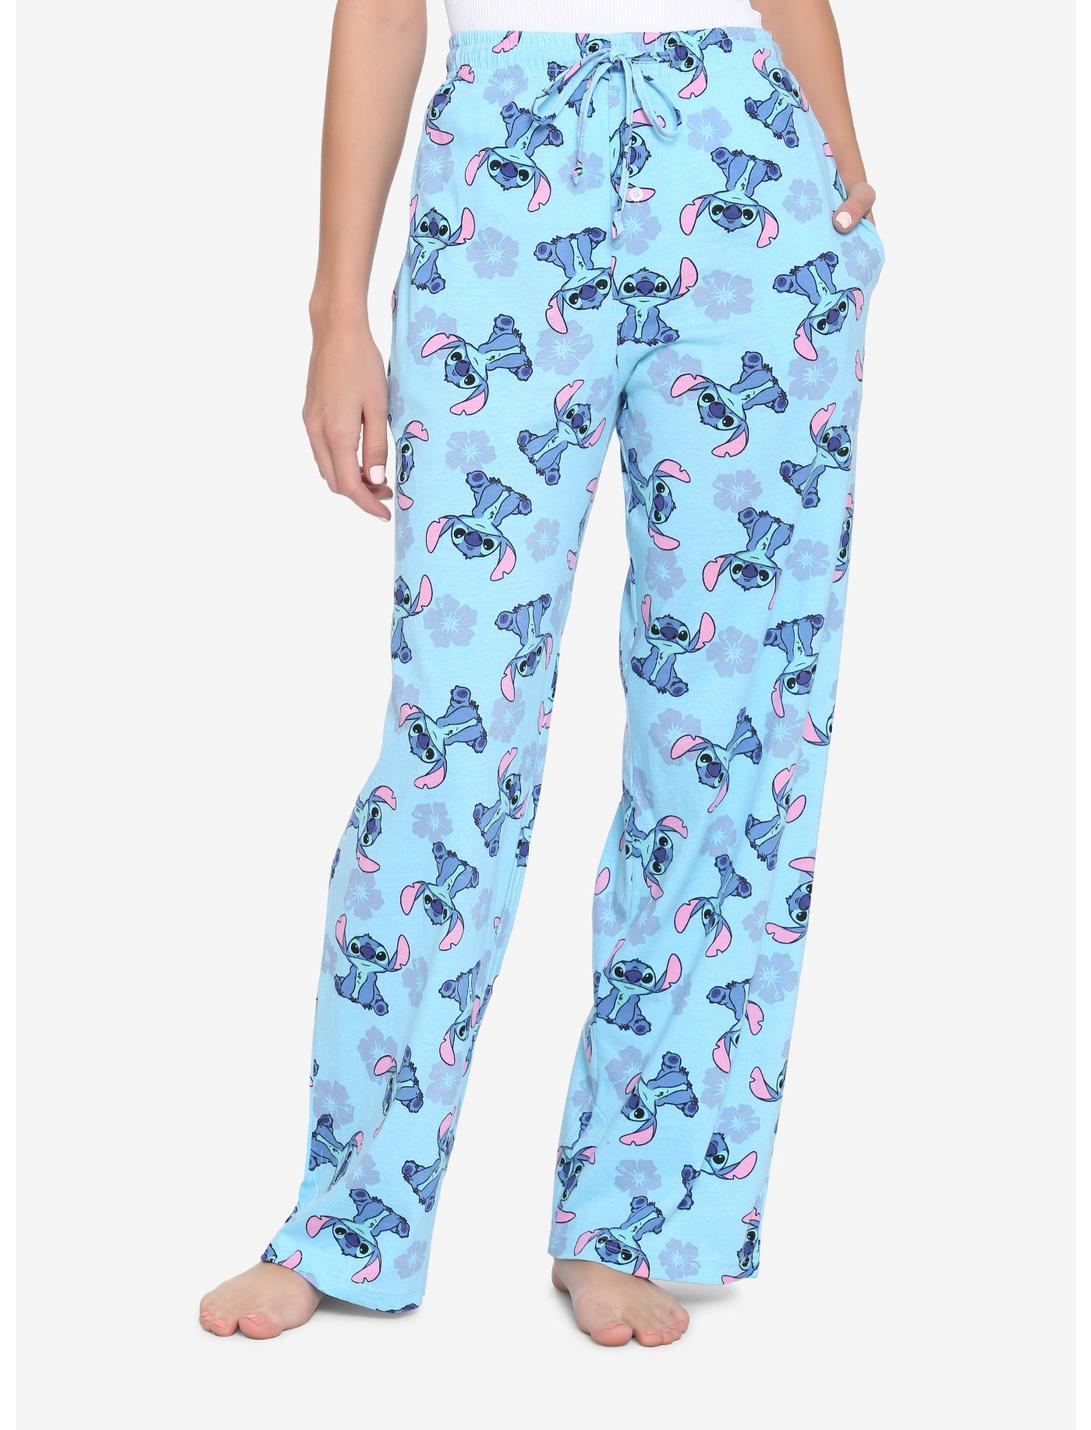 Disney Stitch Lounge Pants for Women Multi 